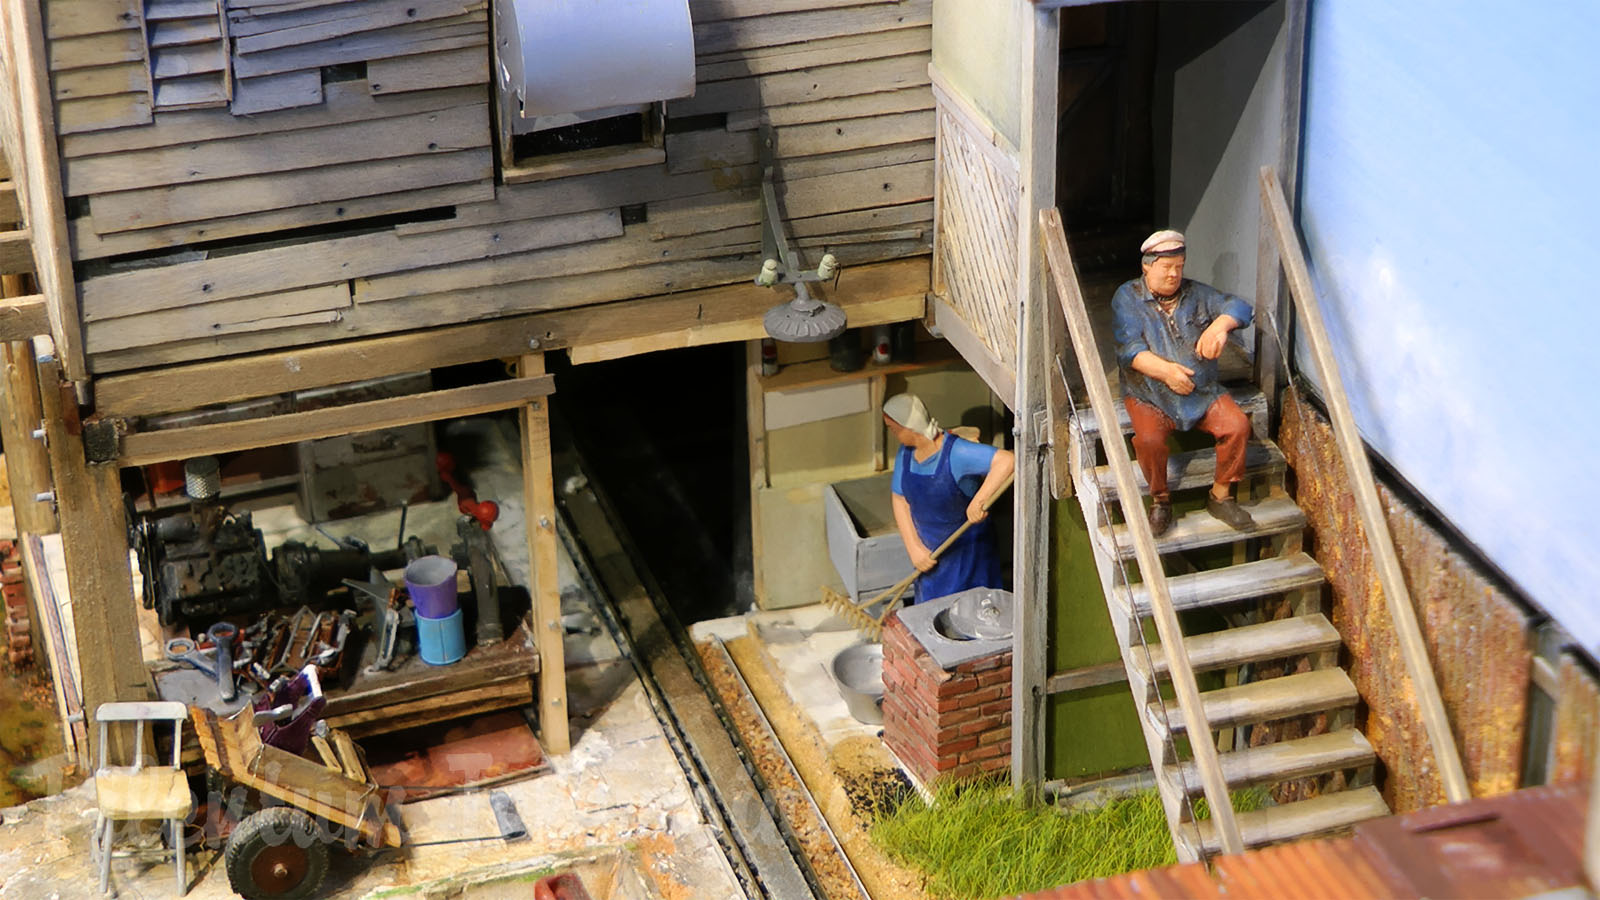 Brilliant Micro Model Railway Diorama from Australia made by Kim Marsh (1/32 Scale Model Train Layout)